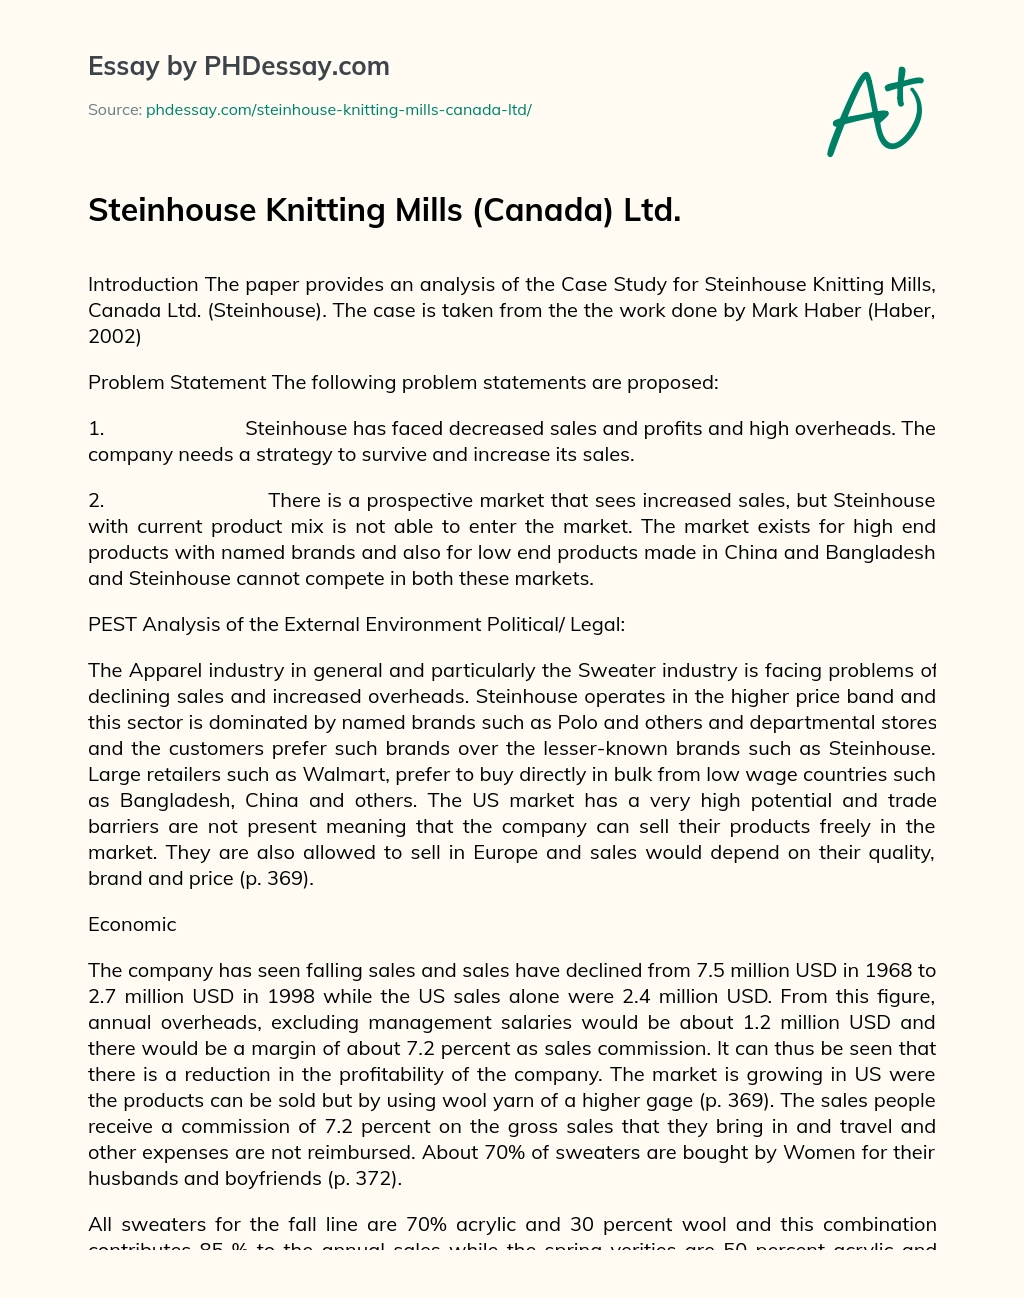 Steinhouse Knitting Mills (Canada) Ltd. essay